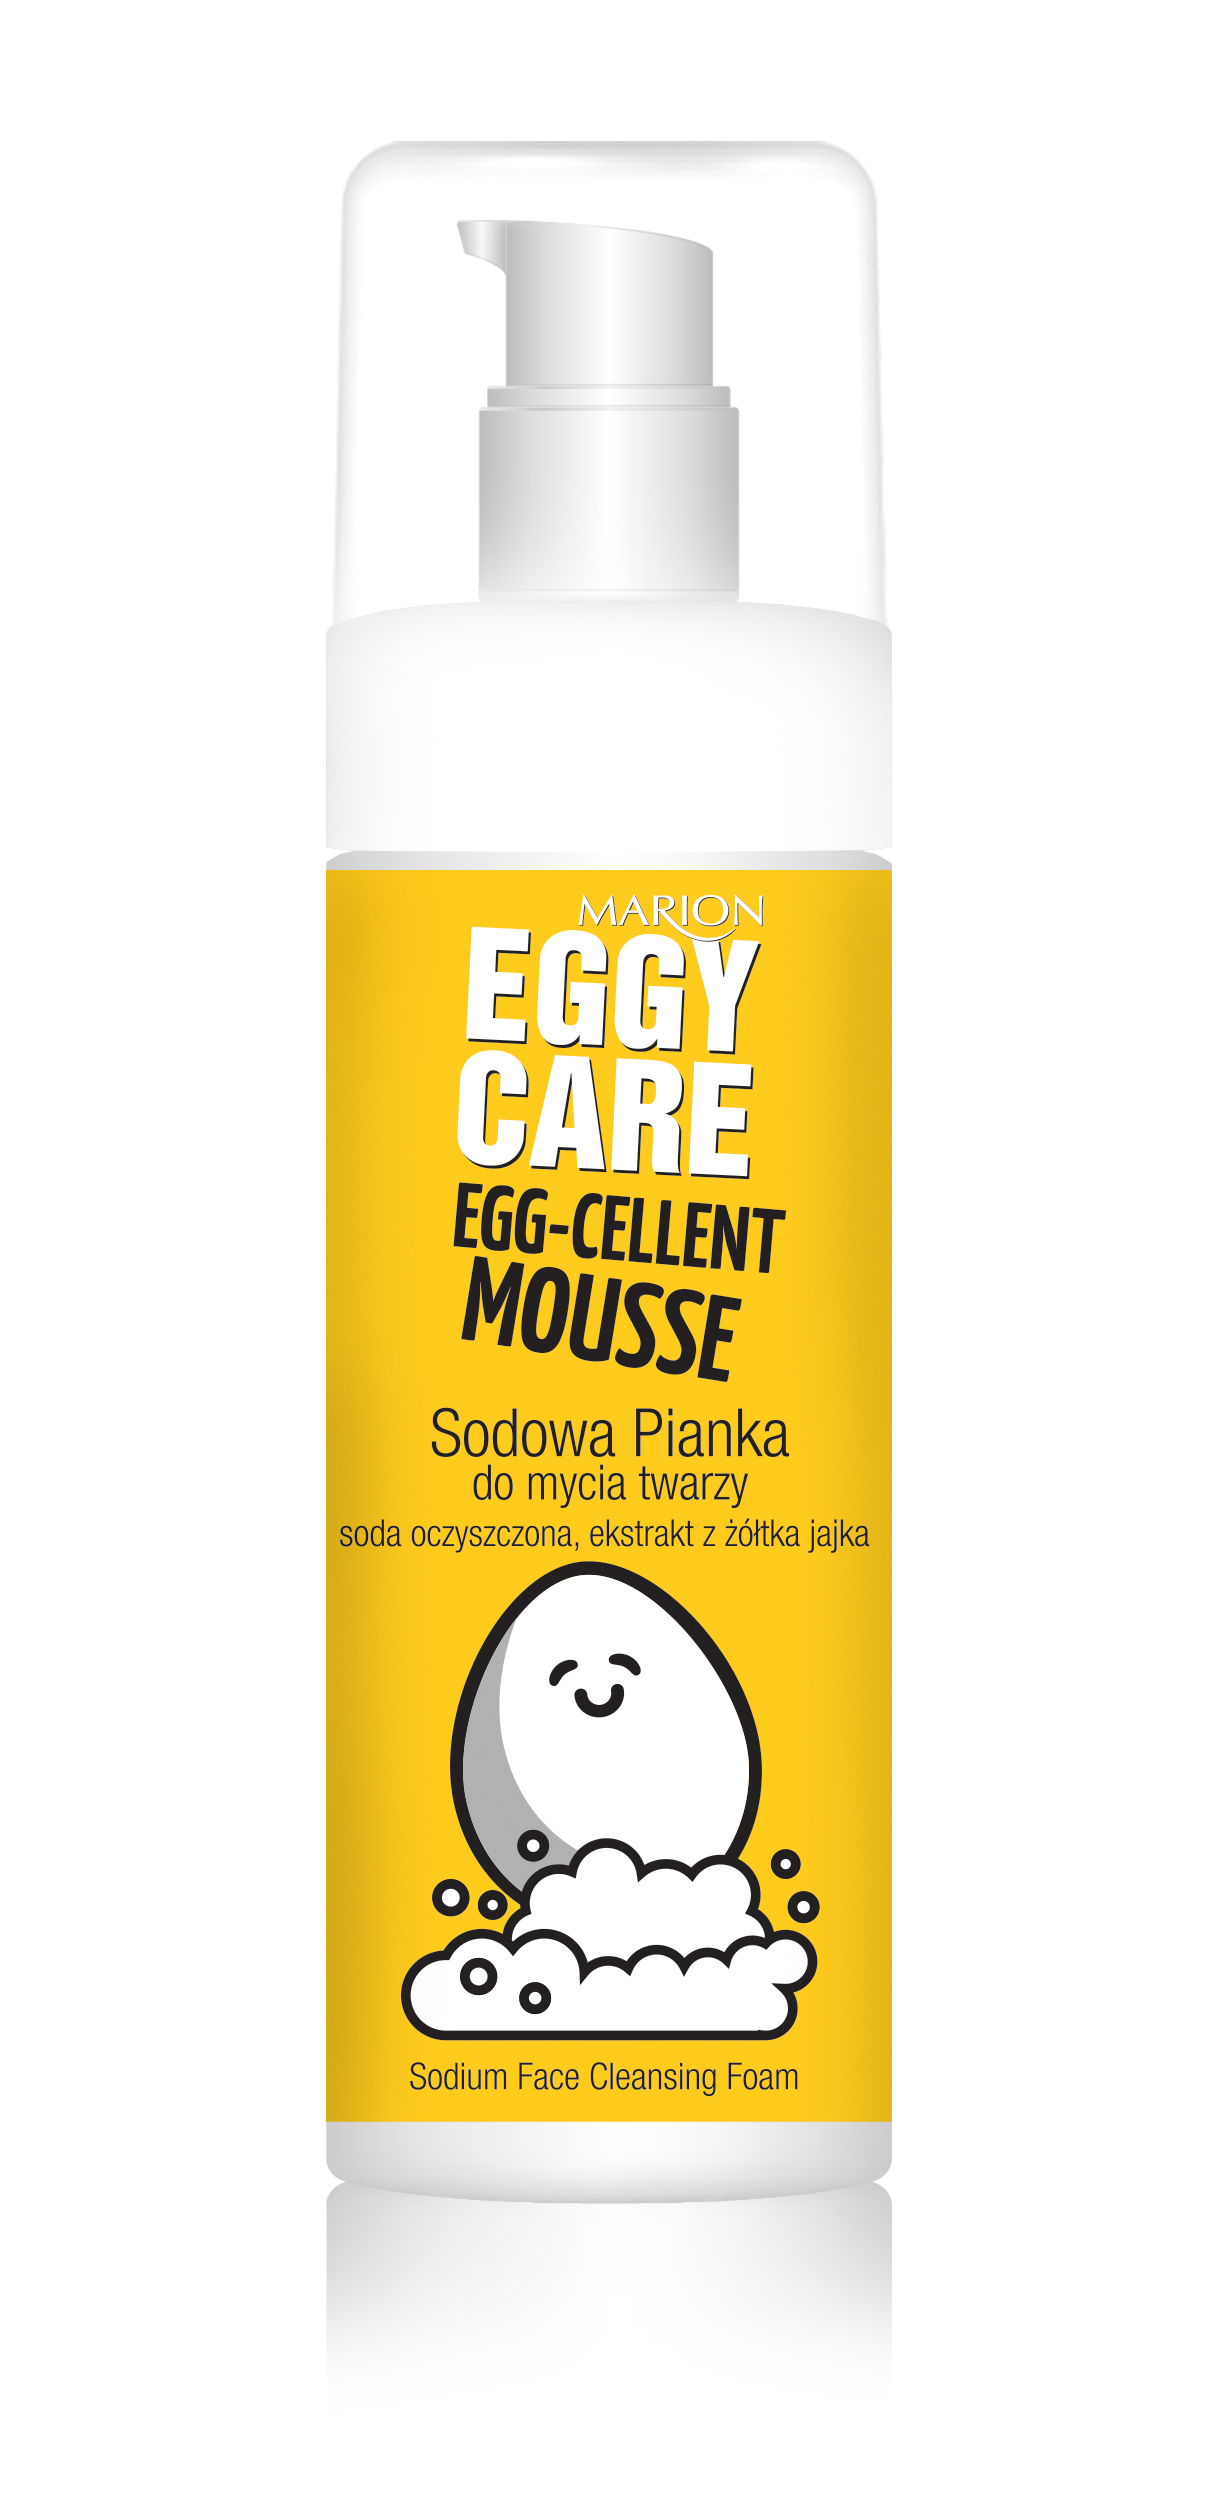 marion egg care egg-cellent mousse sodowa pianka do mycia twarzy